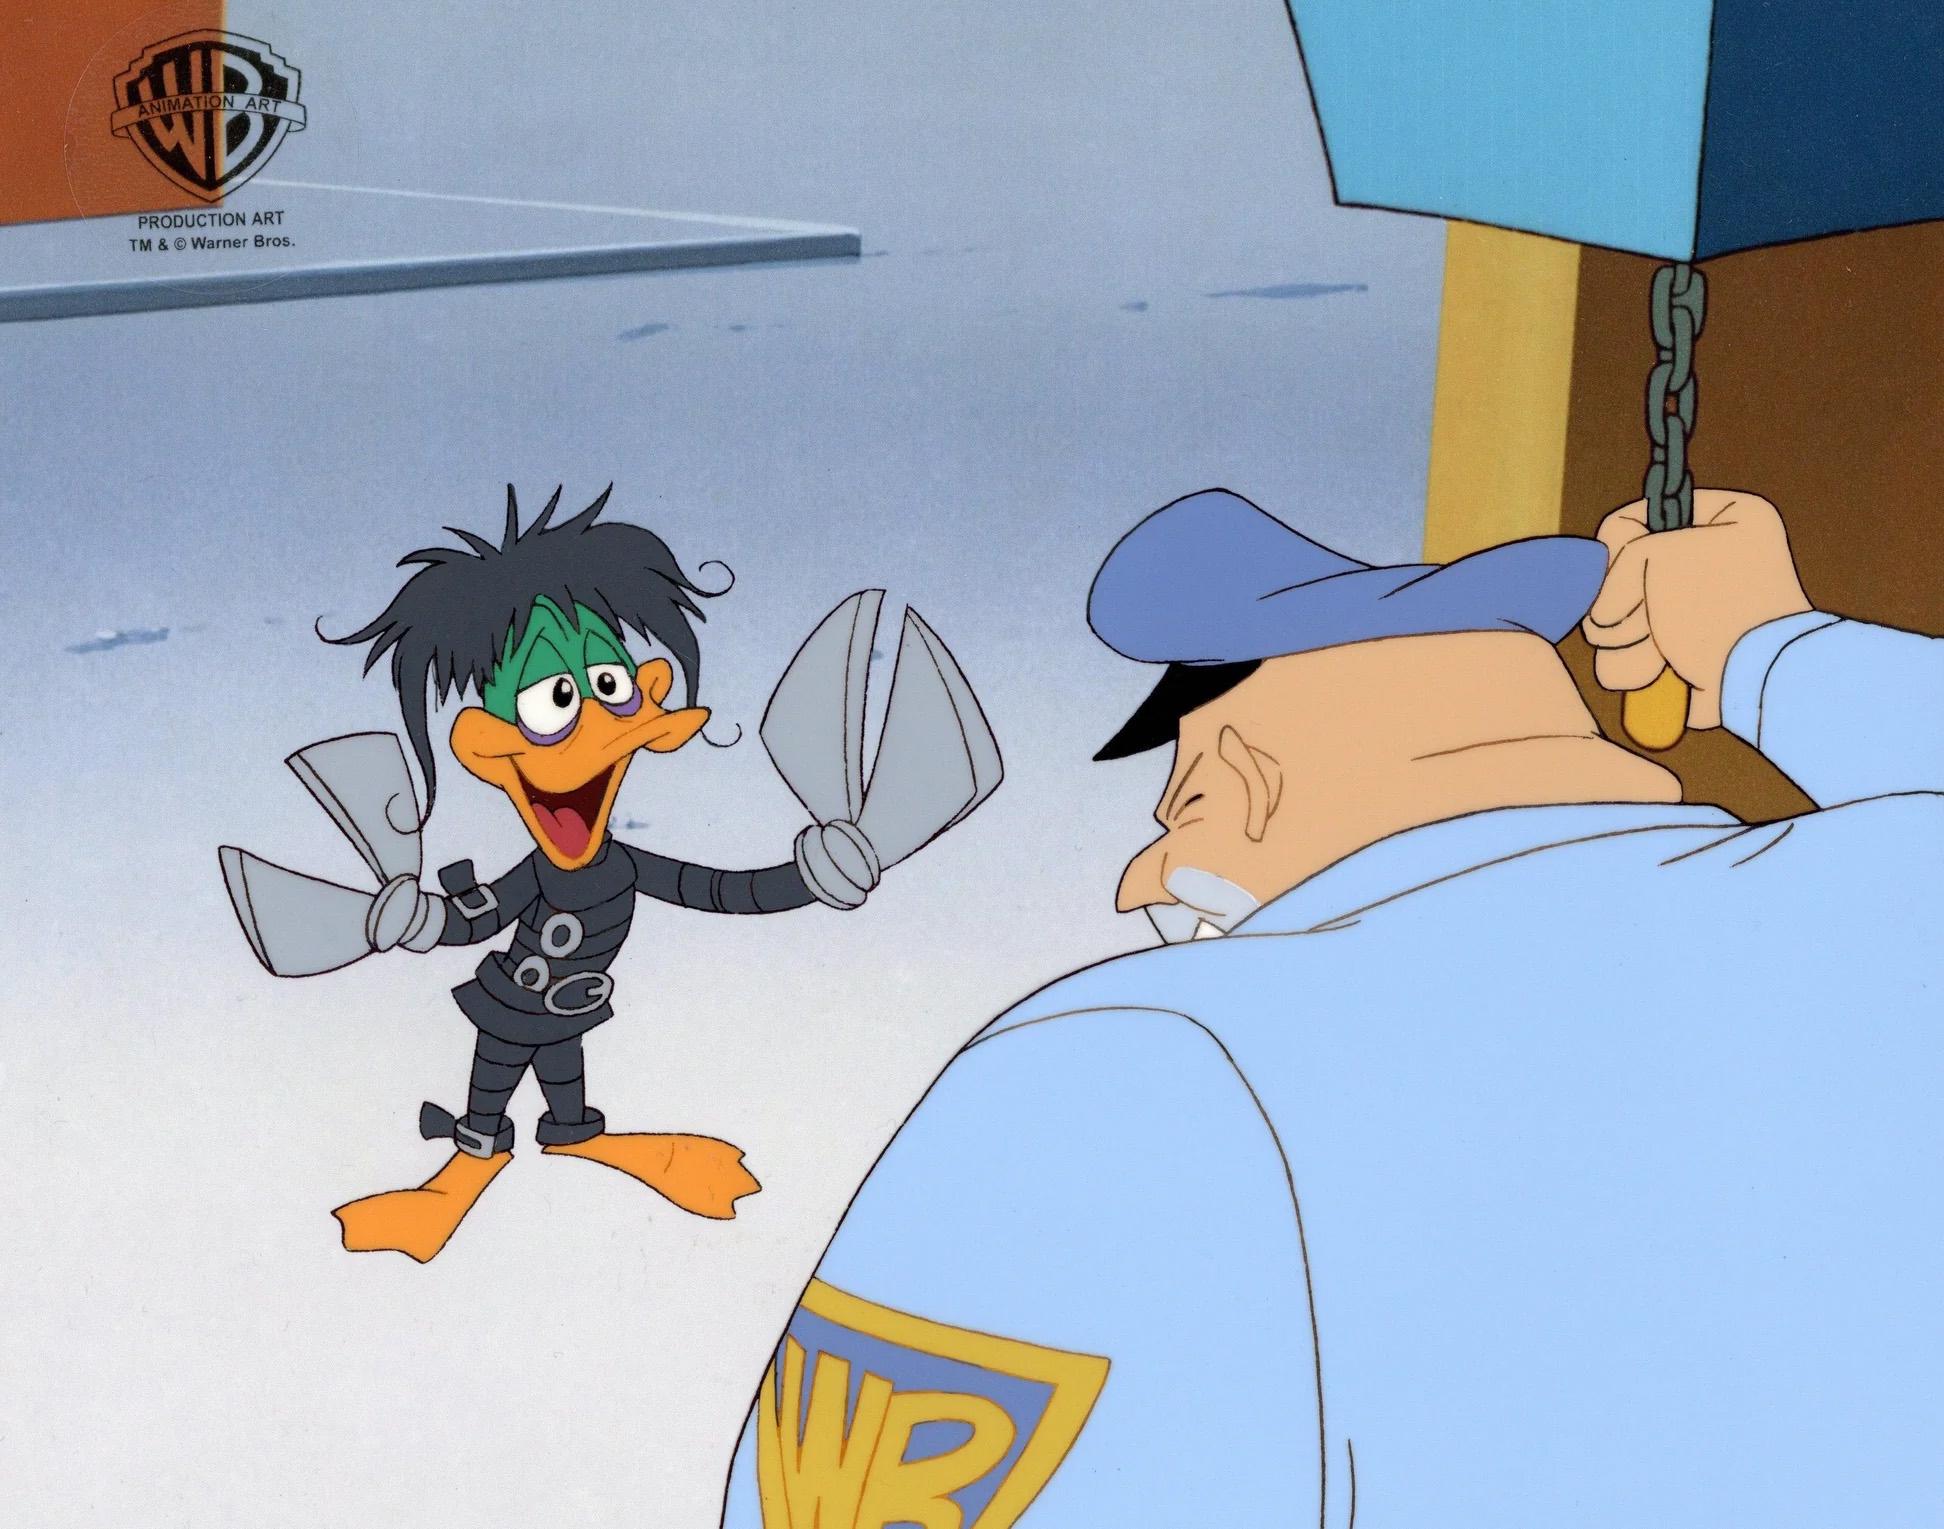 Tiny Toons Adventures Original Production Cel: Plucky Duck and Ralph - Art by Warner Bros. Studio Artists